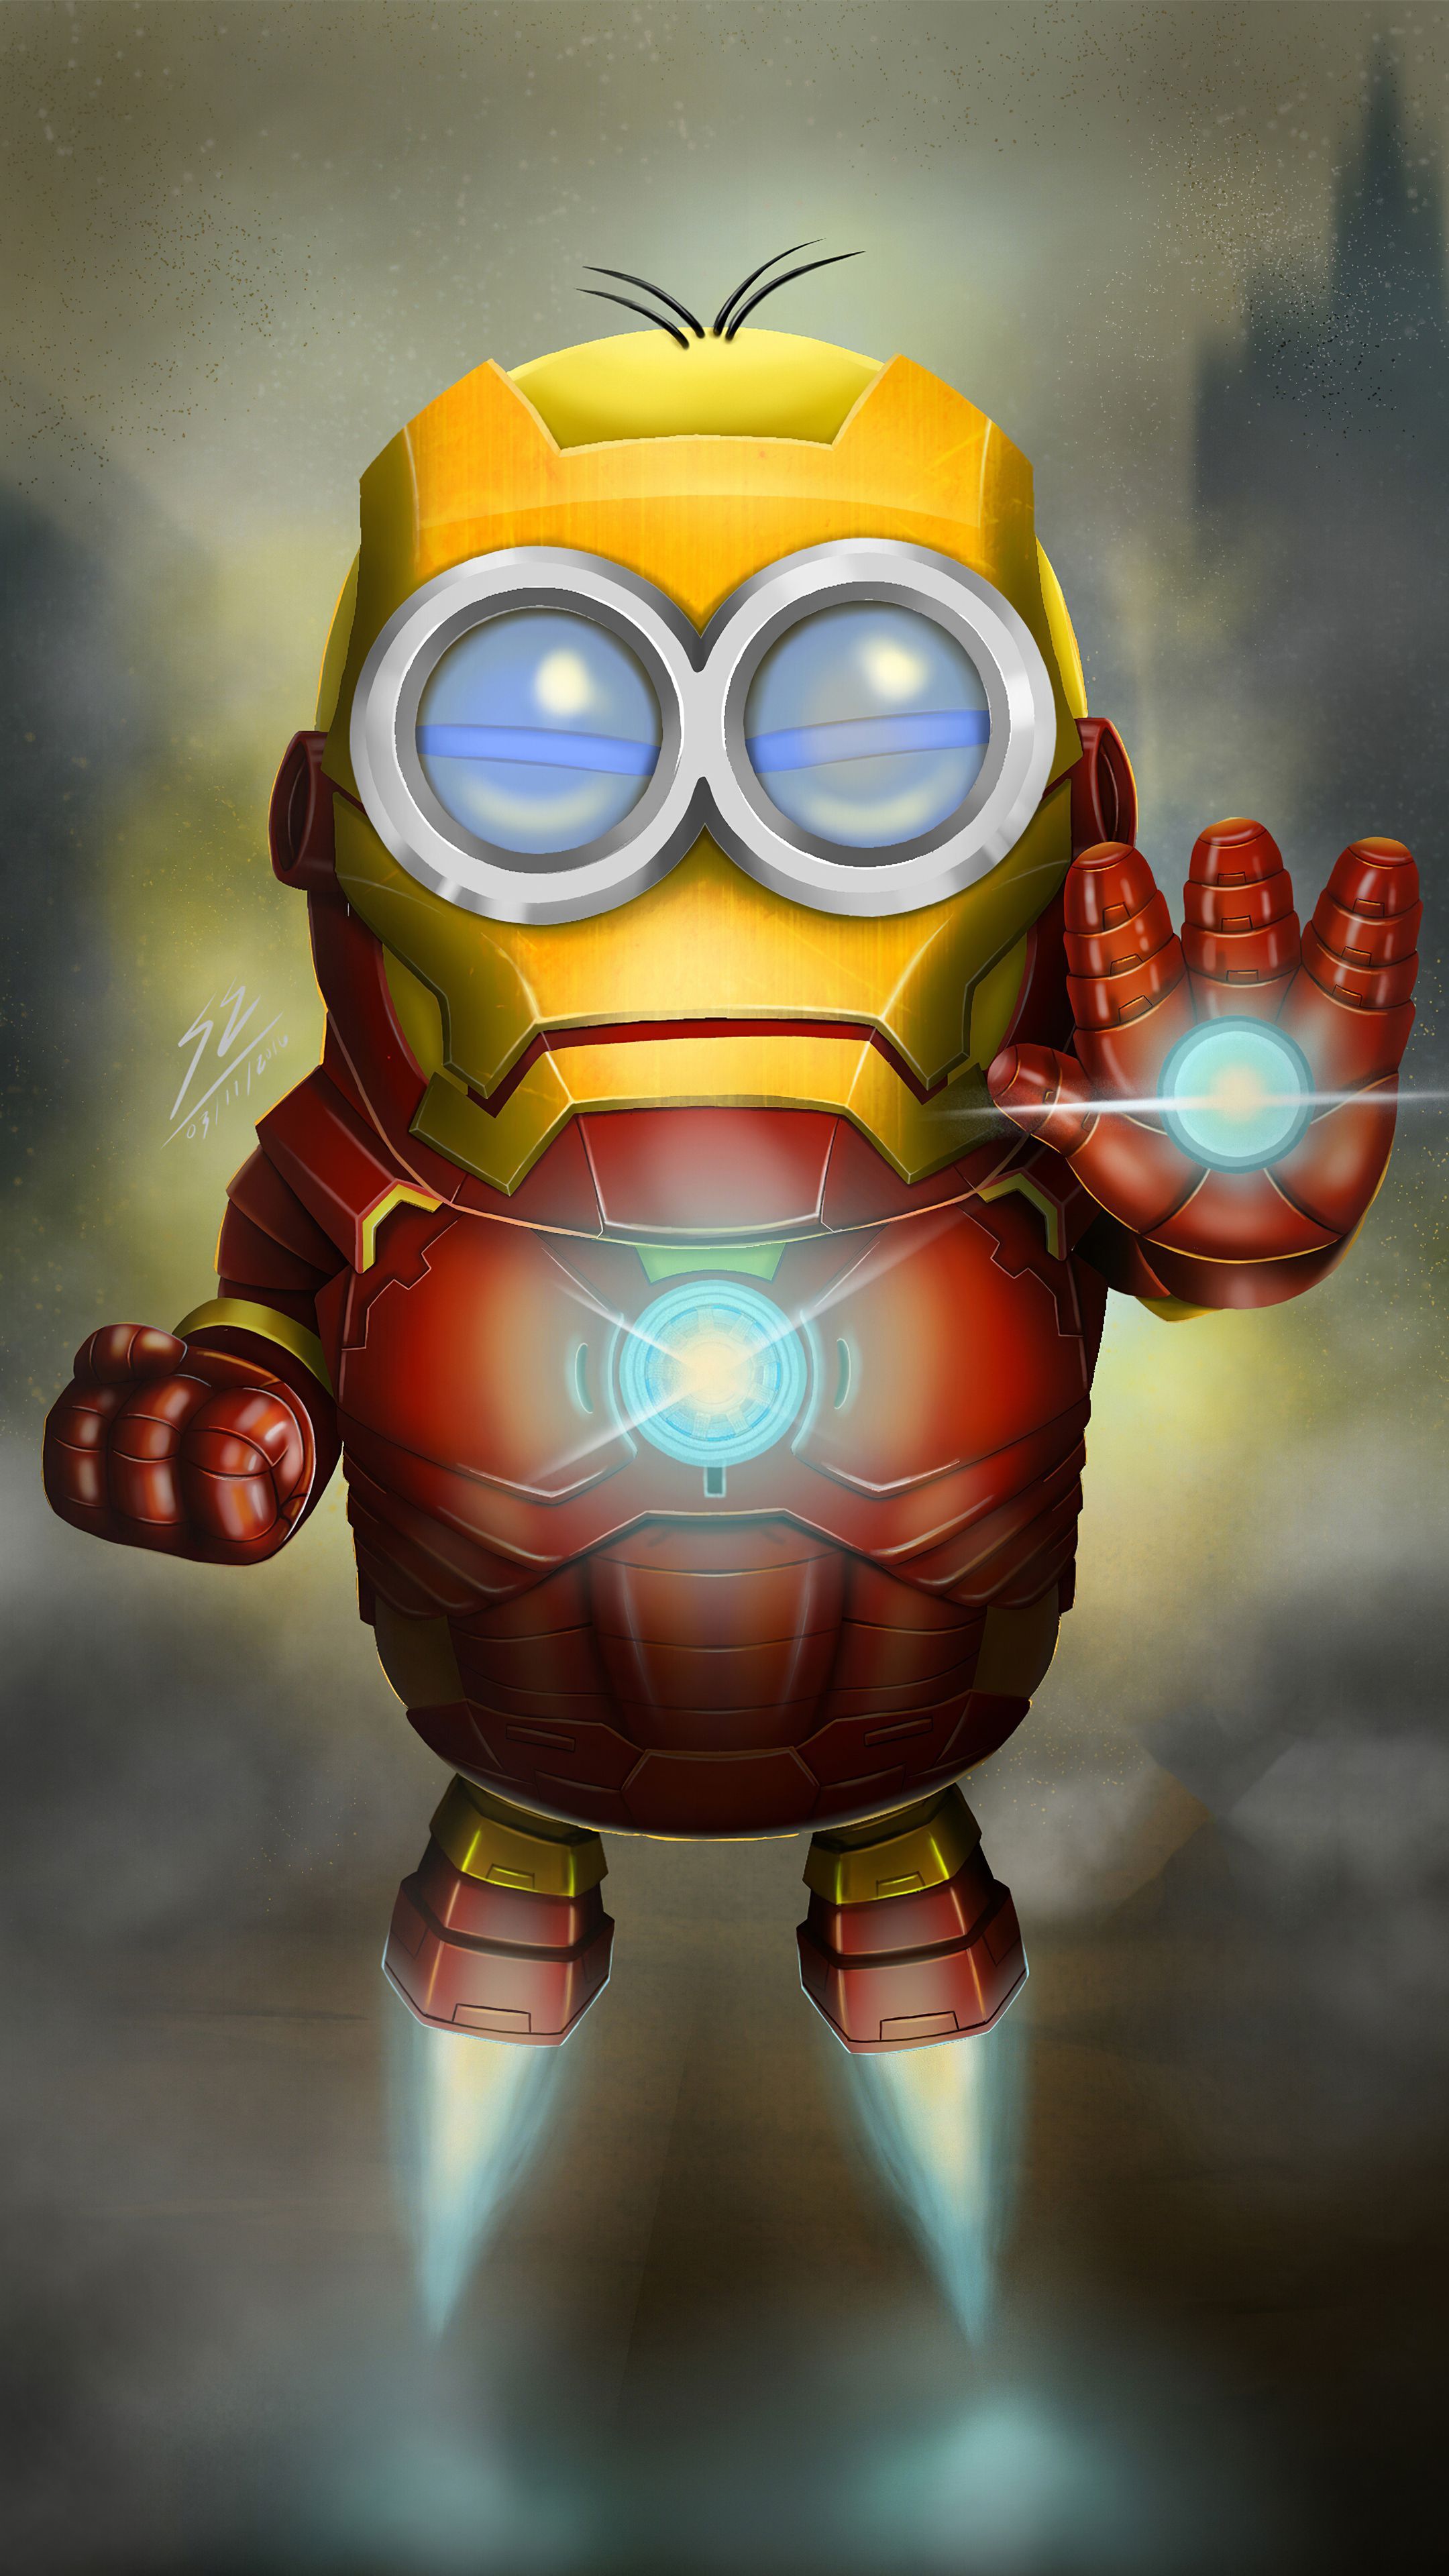 Minion As Iron Man Mobile HD Wallpaper. Minions wallpaper, Minion wallpaper hd, Hero wallpaper